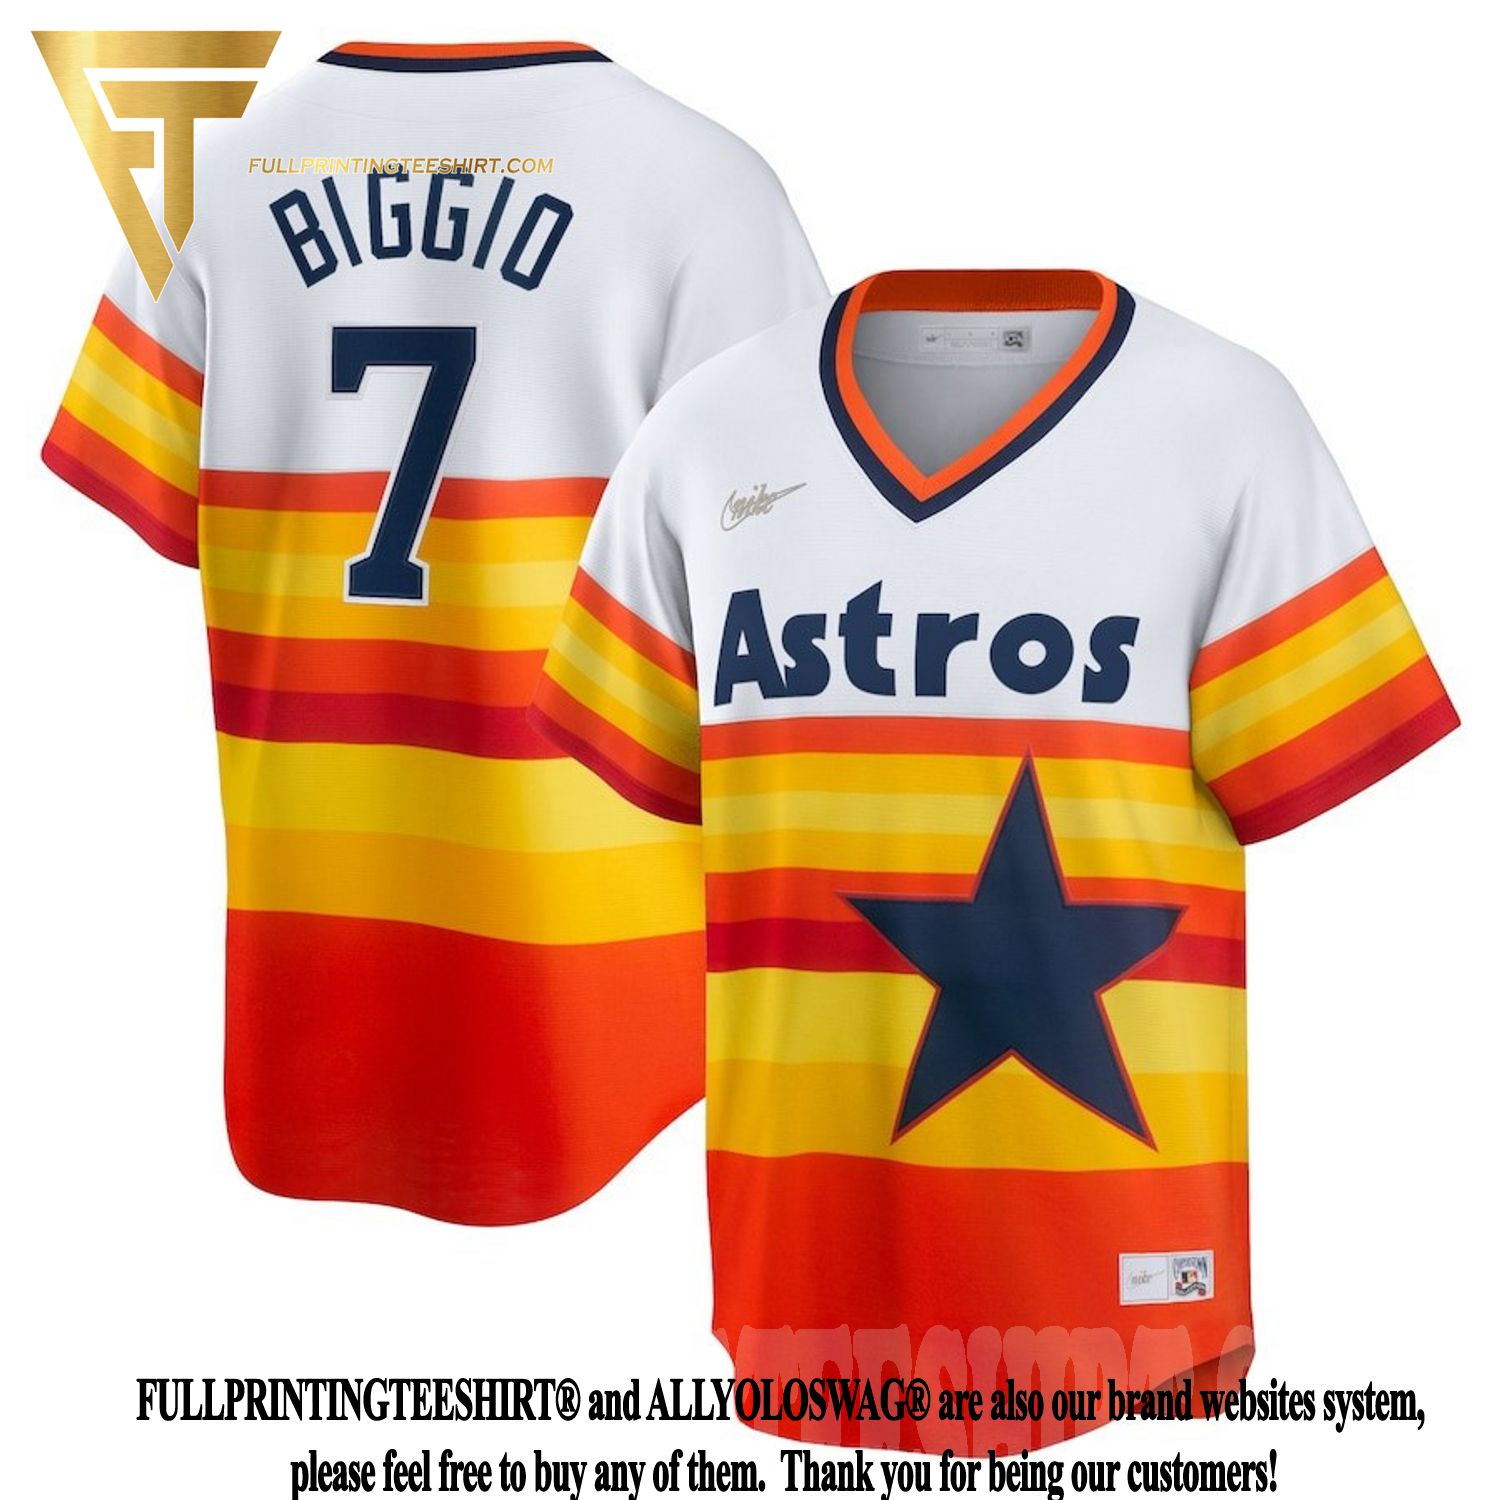 Mauricio Dubon Houston Astros Men's Navy Roster Name & Number T-Shirt 